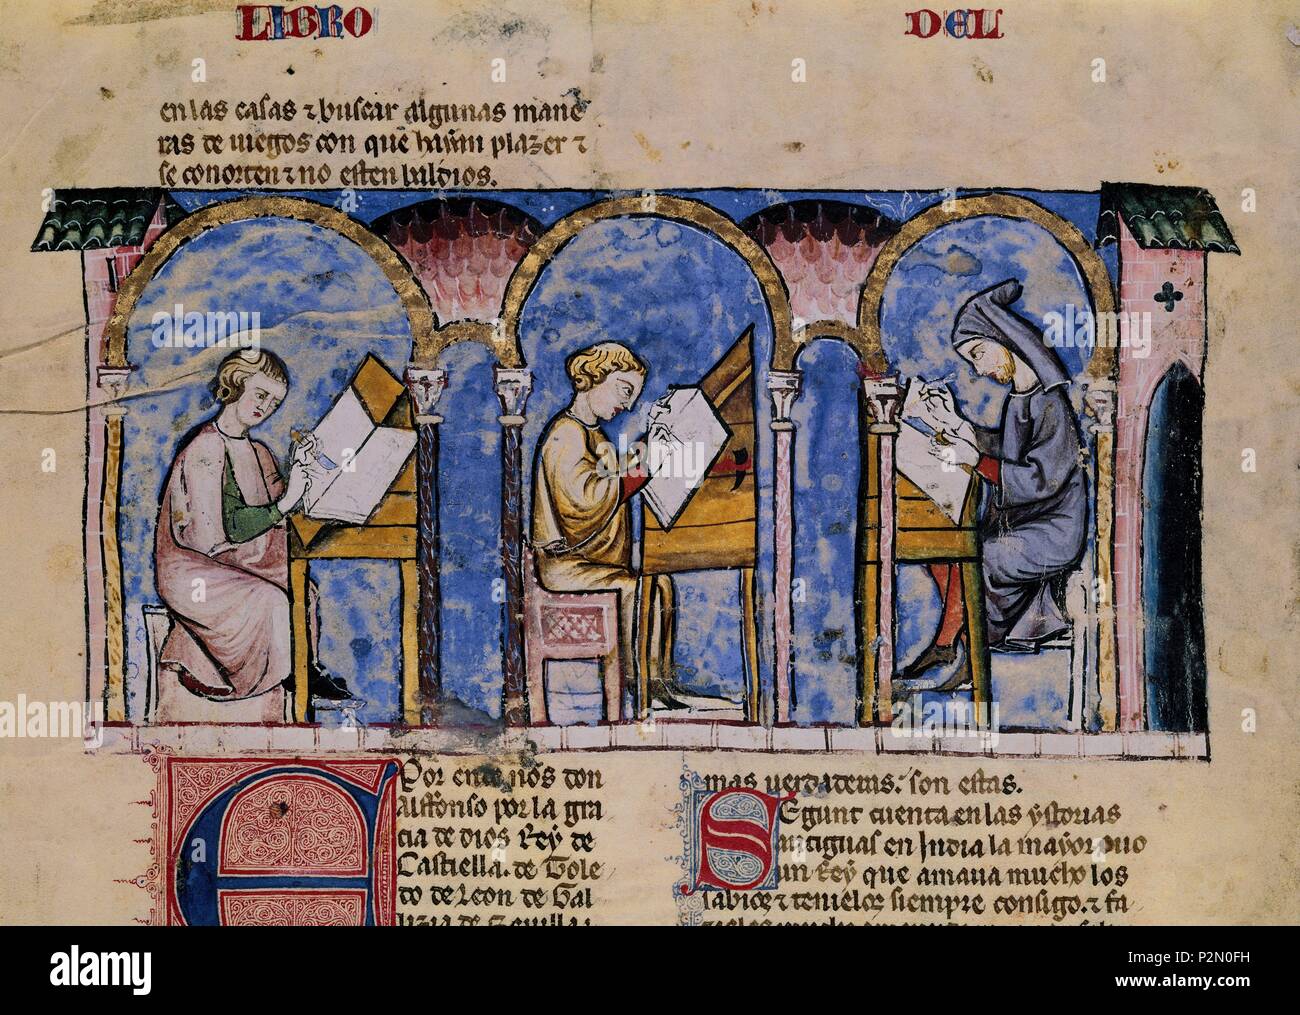 Spanish school. Book of Games: Alphonse X's calligraphers. 13th century. Book 1, folio 1 V. Madrid, San Lorenzo de El Escorial library. Author: Alfonso X of Castile the Wise (1221-1284). Location: MONASTERIO-BIBLIOTECA-COLECCION, SAN LORENZO DEL ESCORIAL, MADRID, SPAIN. Stock Photo